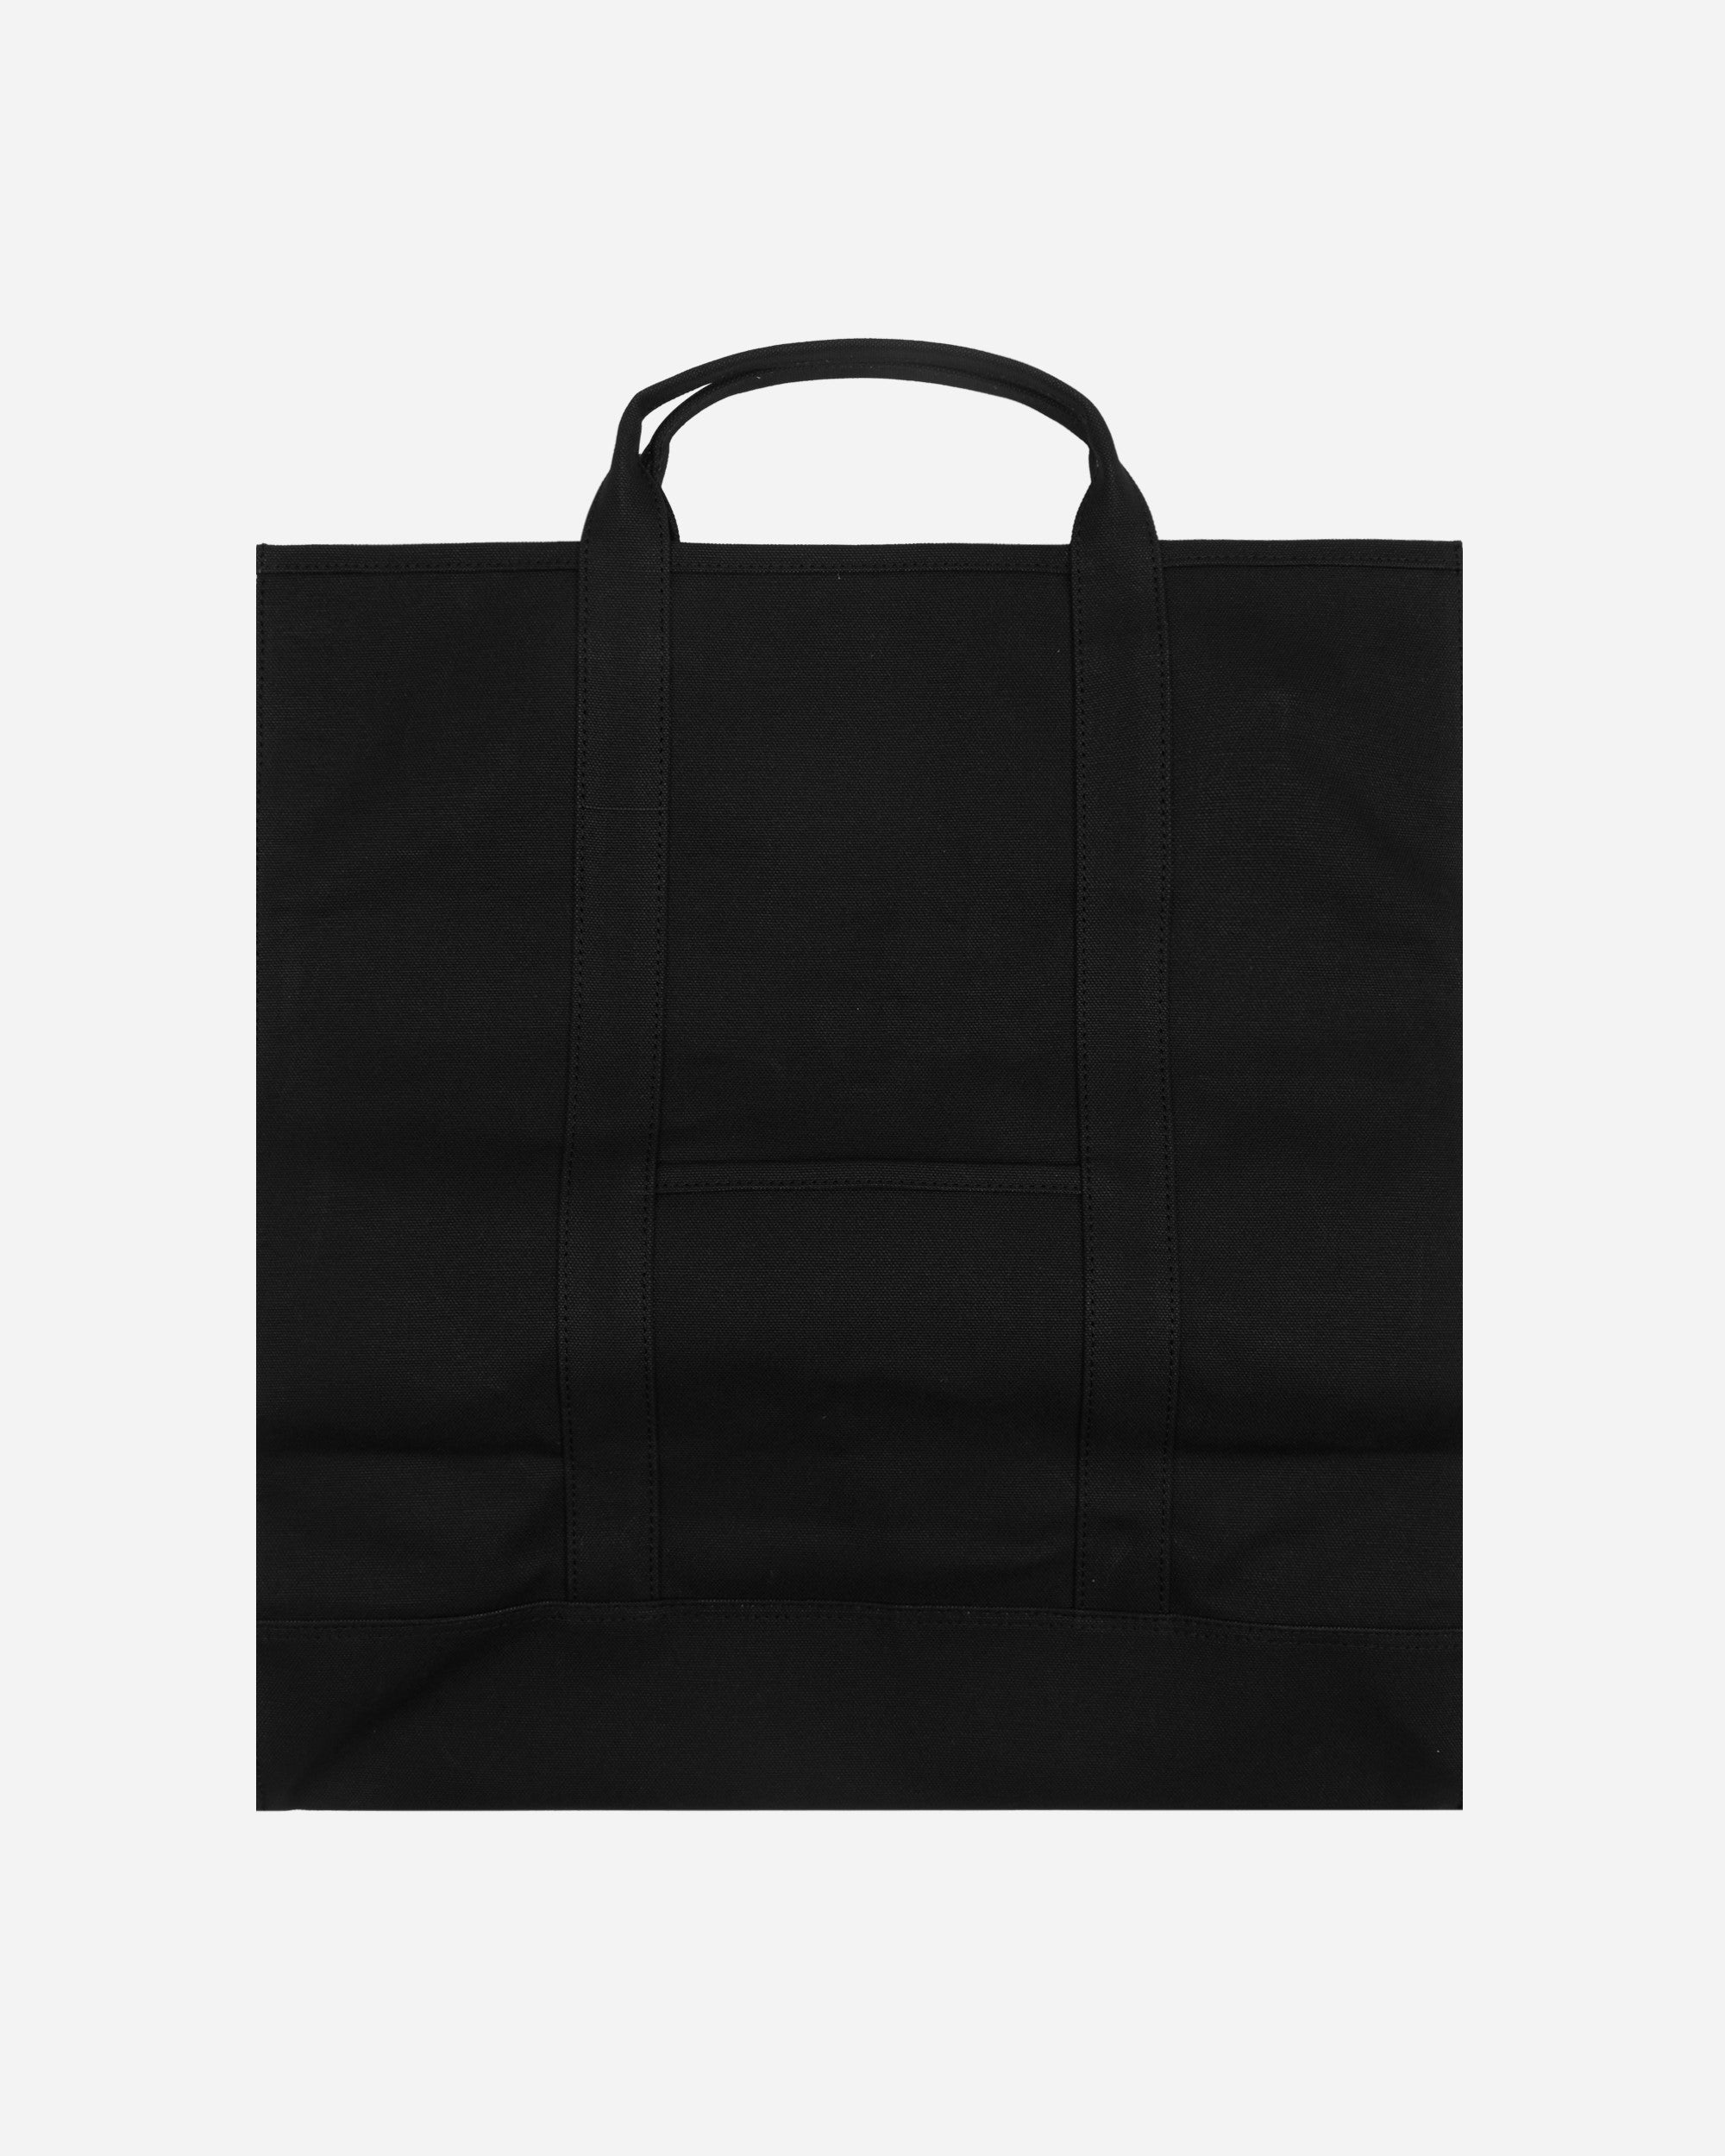 retaW Laudry Bag Logo Black Bags and Backpacks Tote RTW-ACC-868 BLK